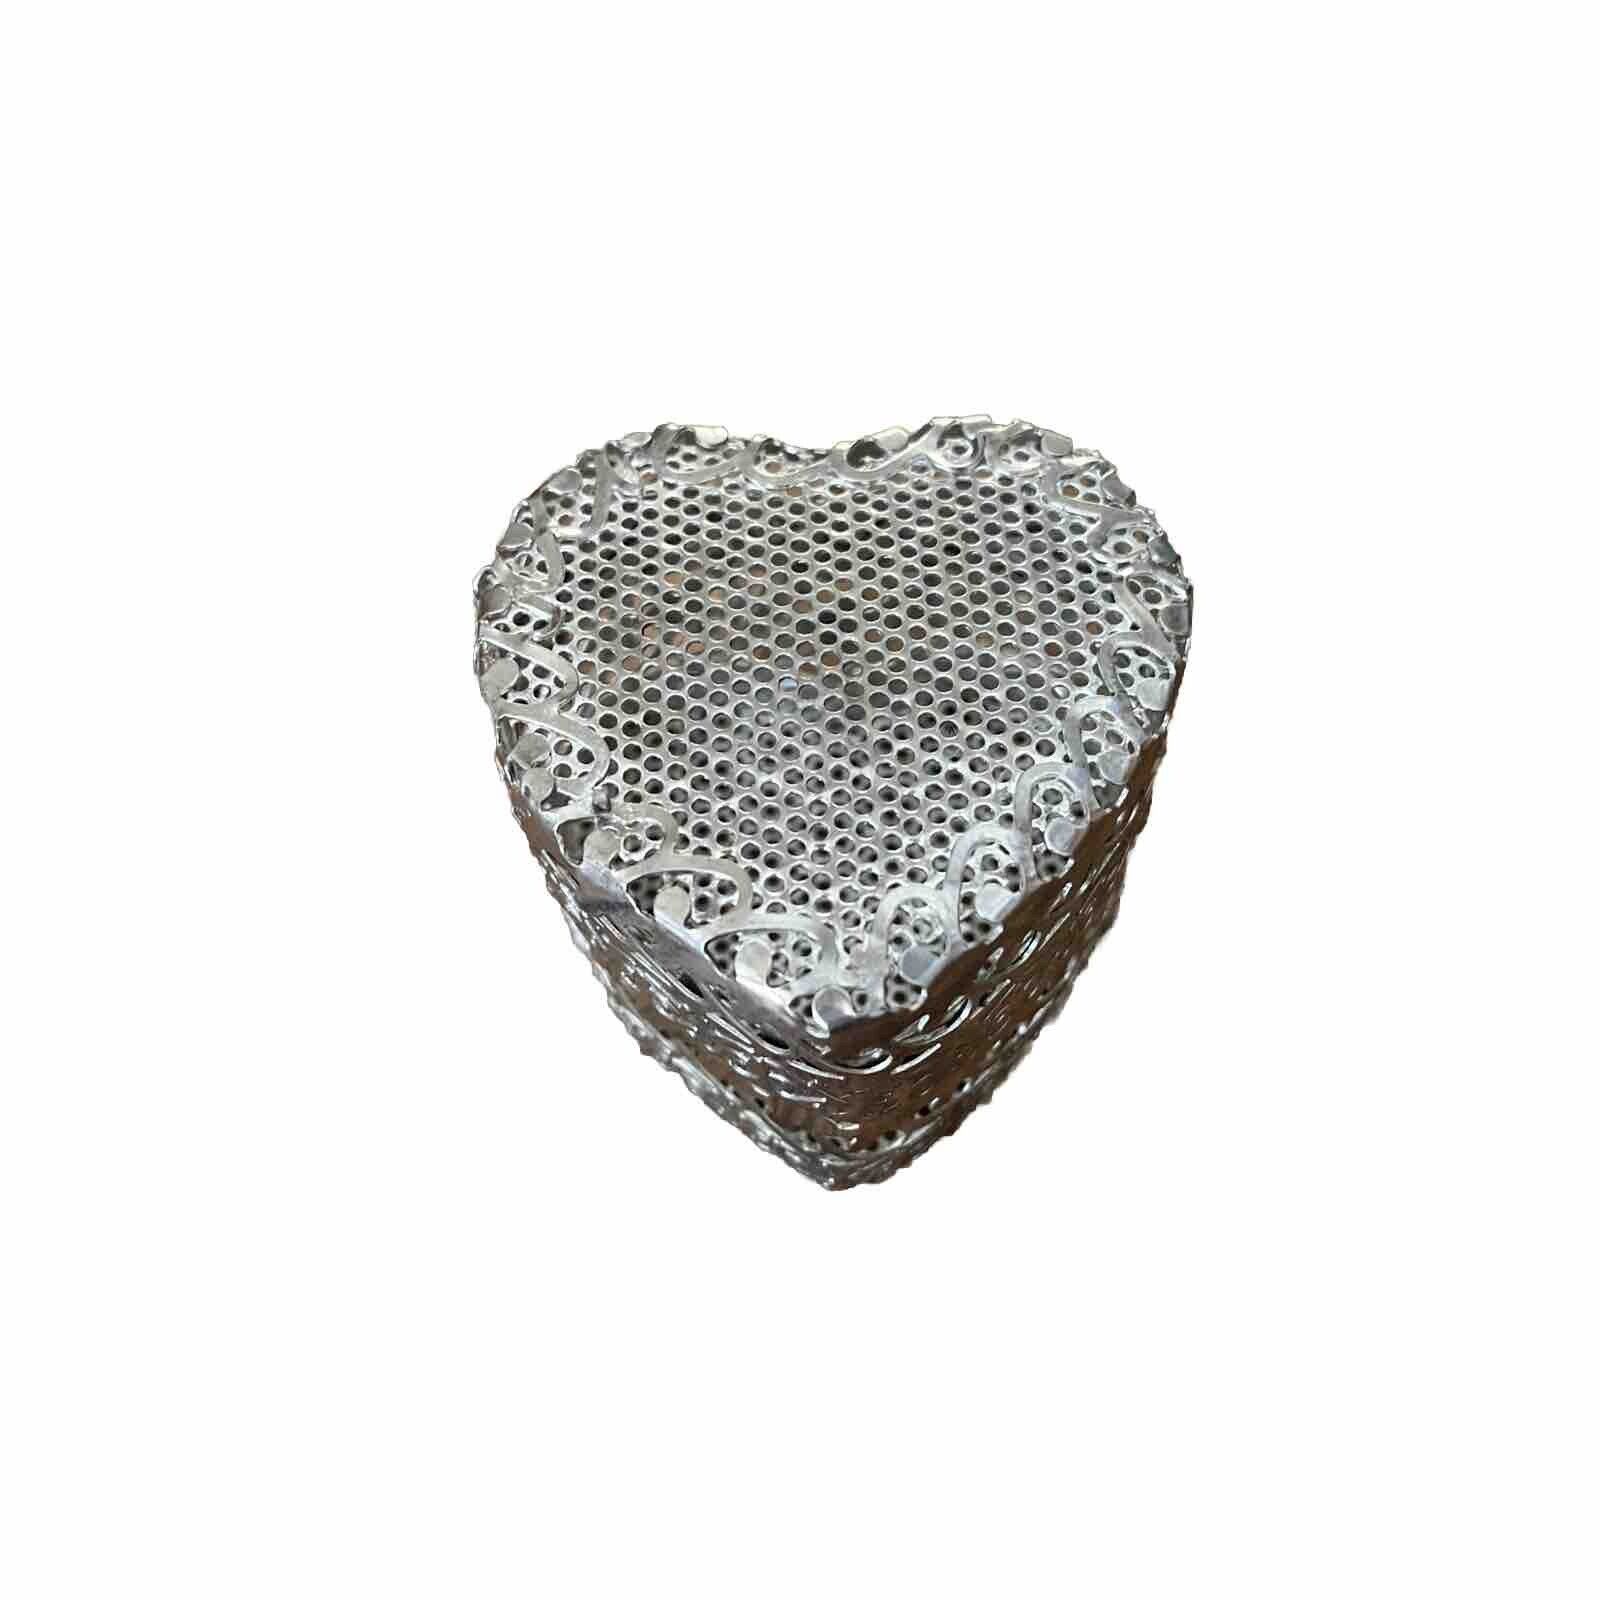 Heart-shaped, trinket box, beautiful, intricate, filigree, metal mesh design